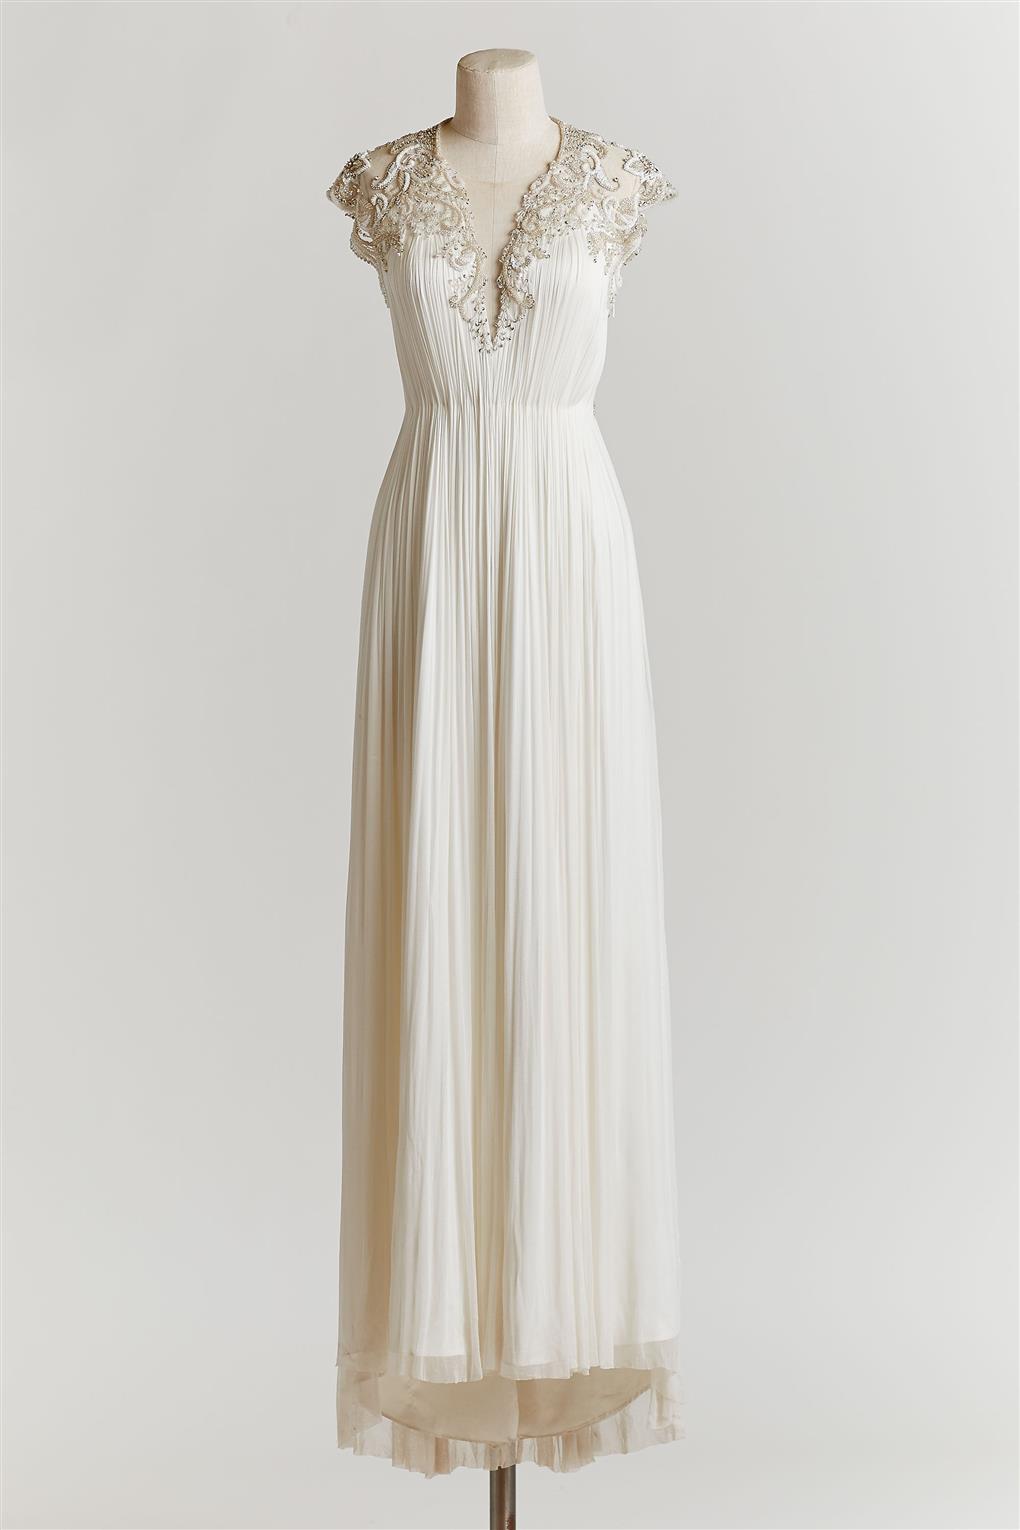 Winnie Wedding Dress from BHLDN's Spring 2015 Bridal Collection